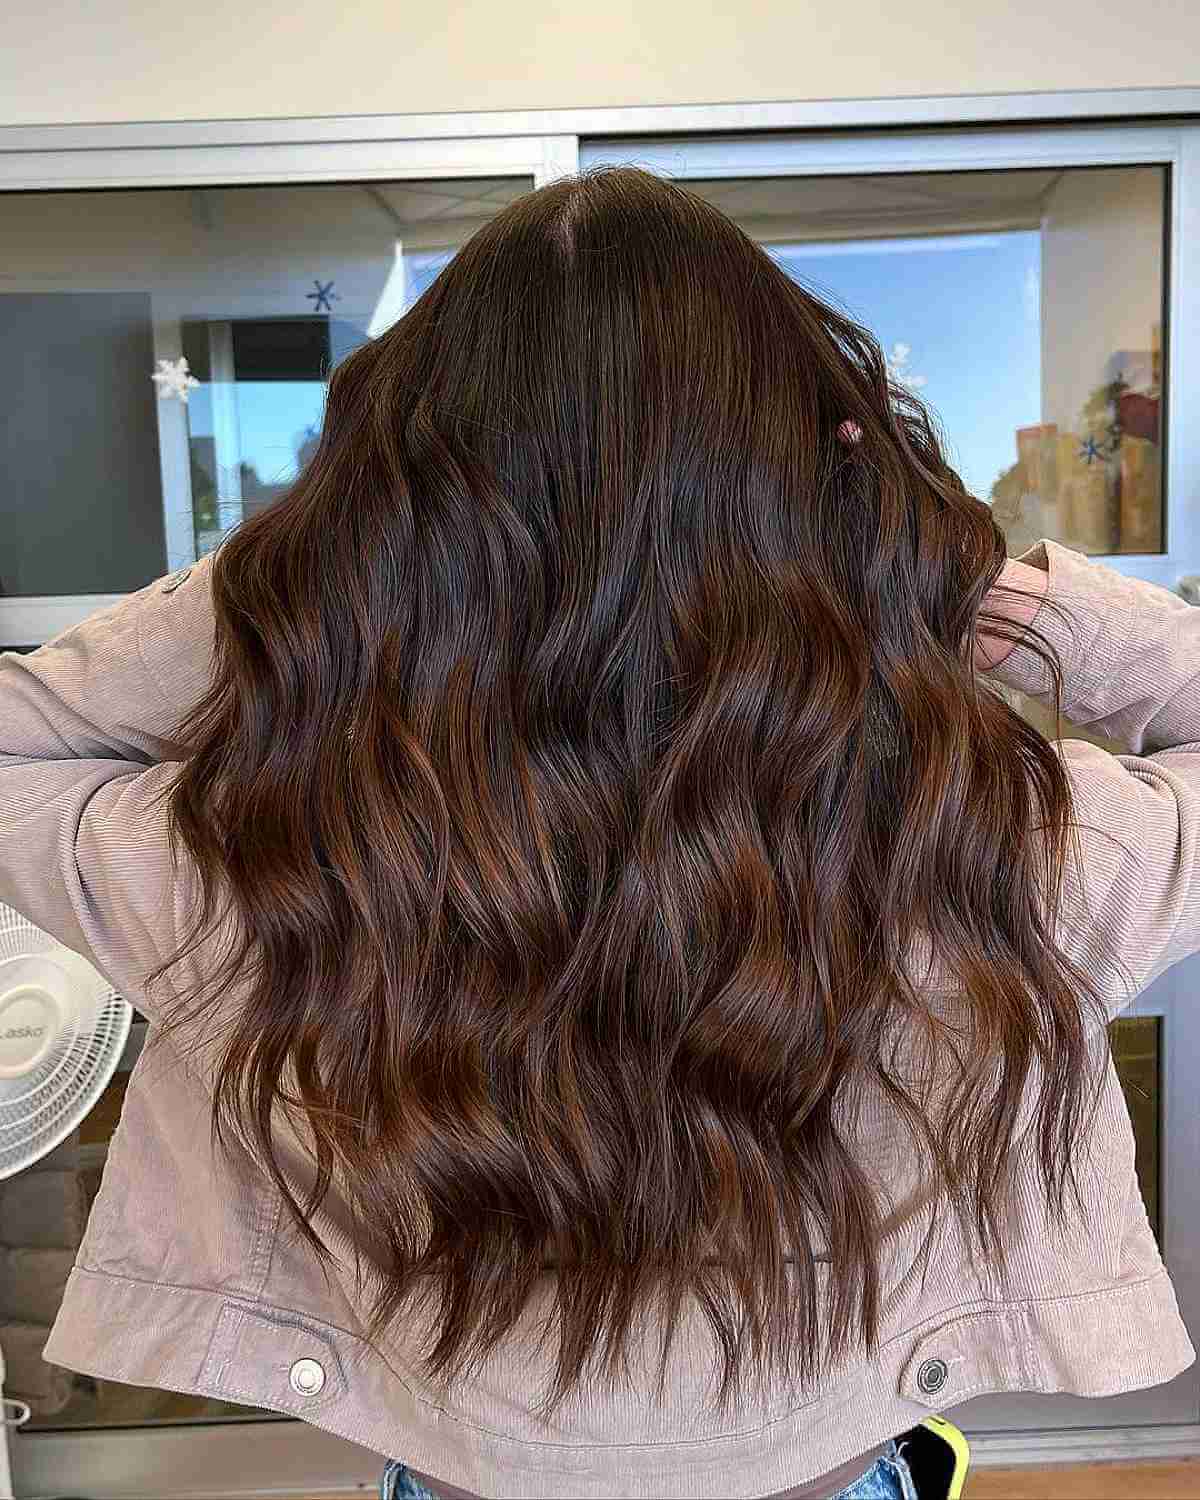 Soft Voluminous Waves on Rich Brown Hair